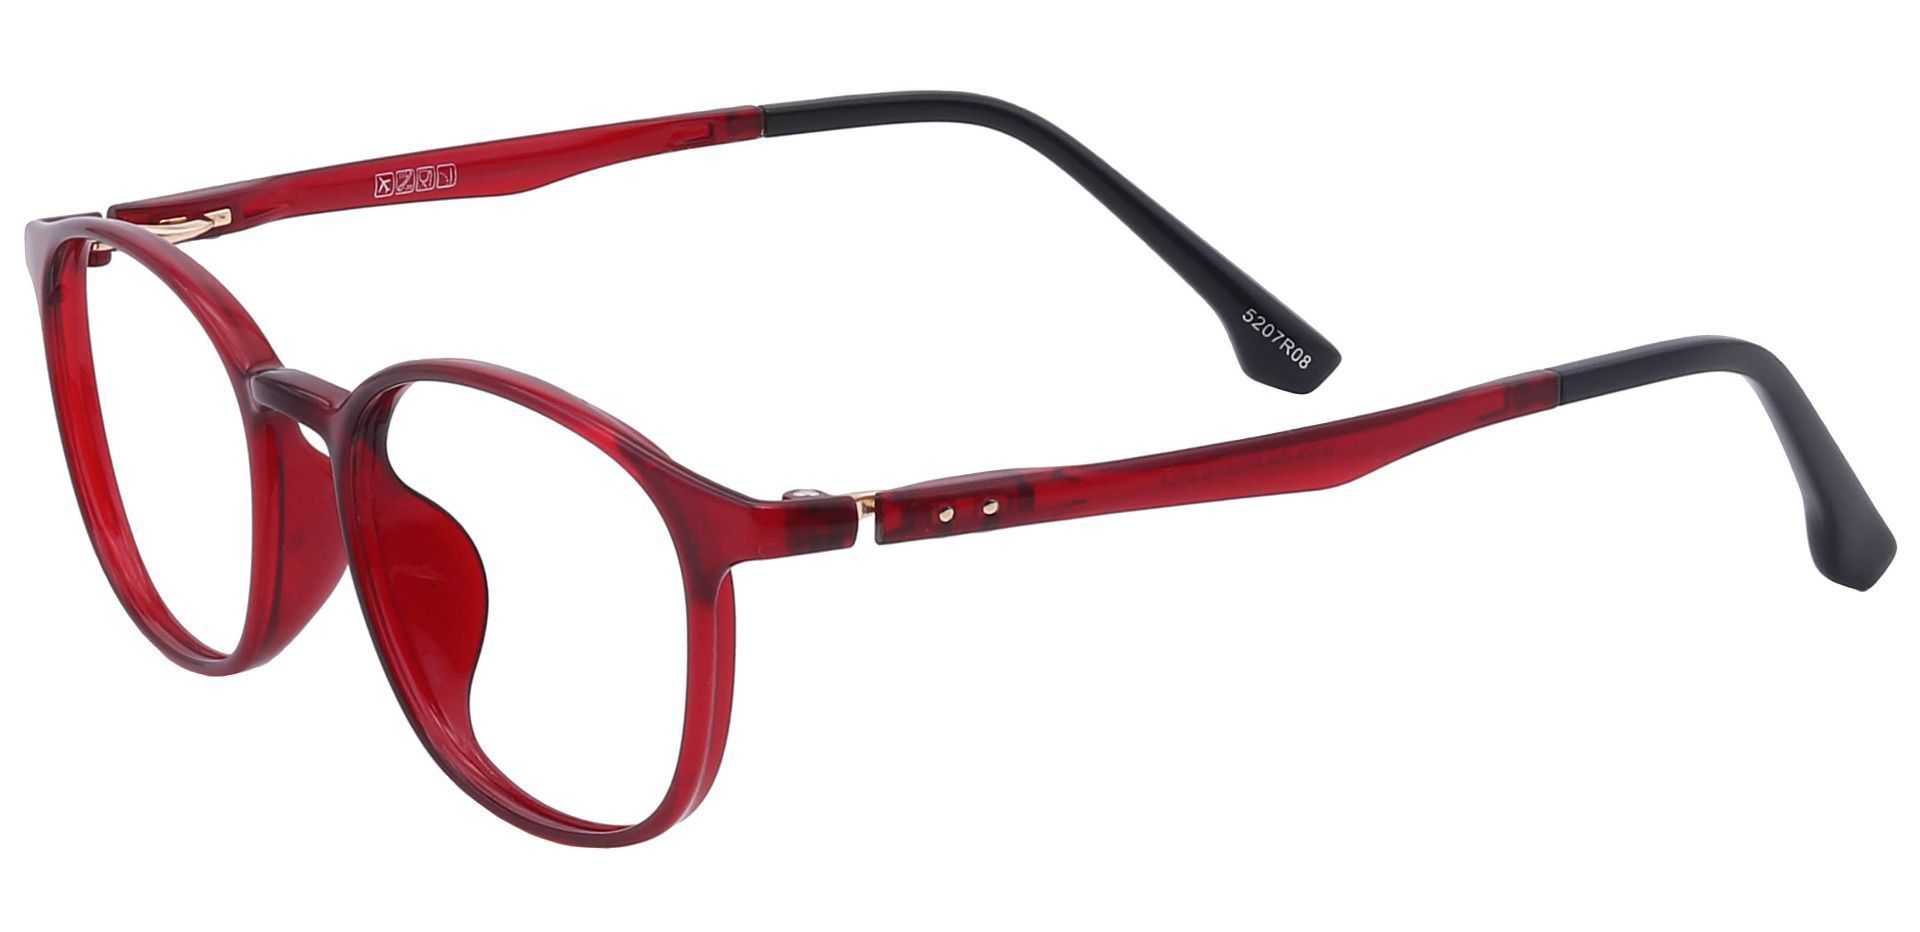 Shannon Oval Eyeglasses Frame - Red